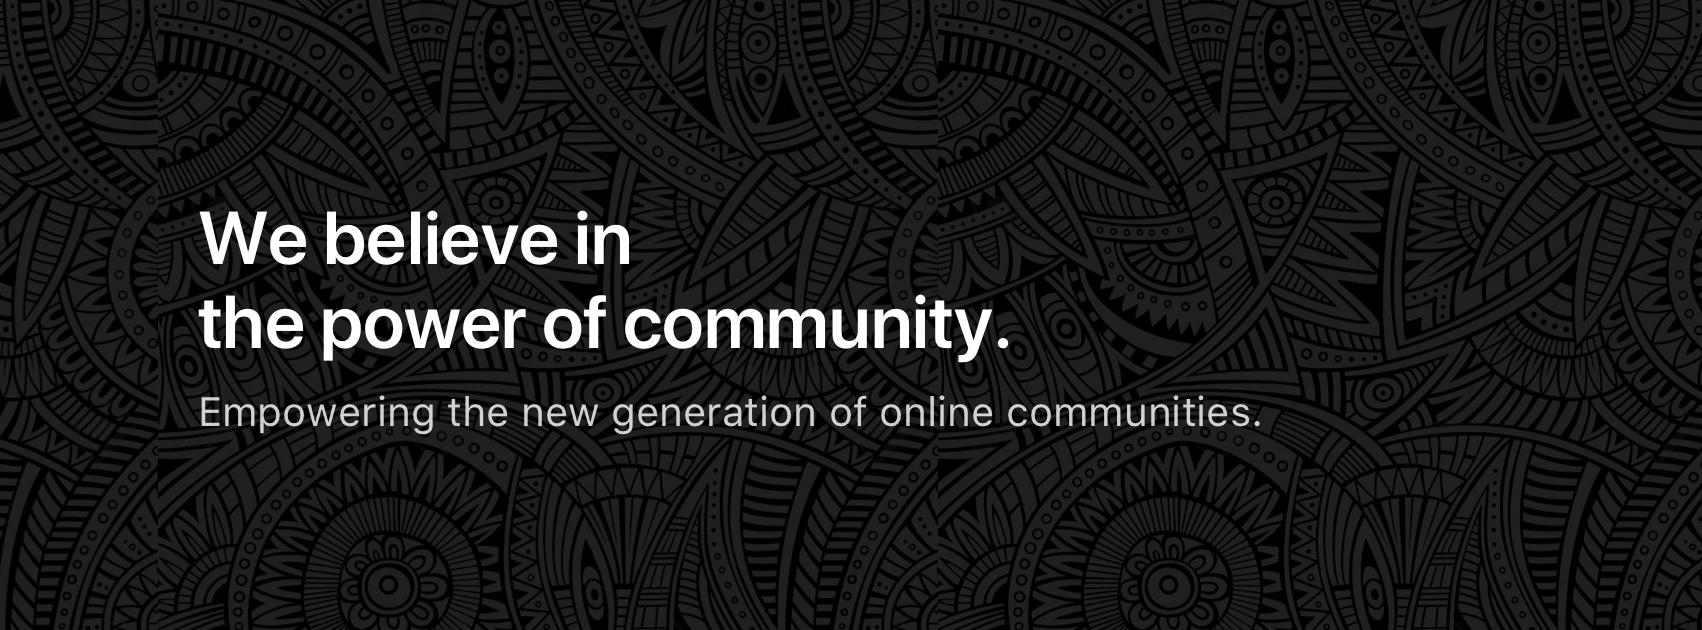 Review Tribe Community Platform: Customizable Community Platform to Create Online Communities - Appvizer